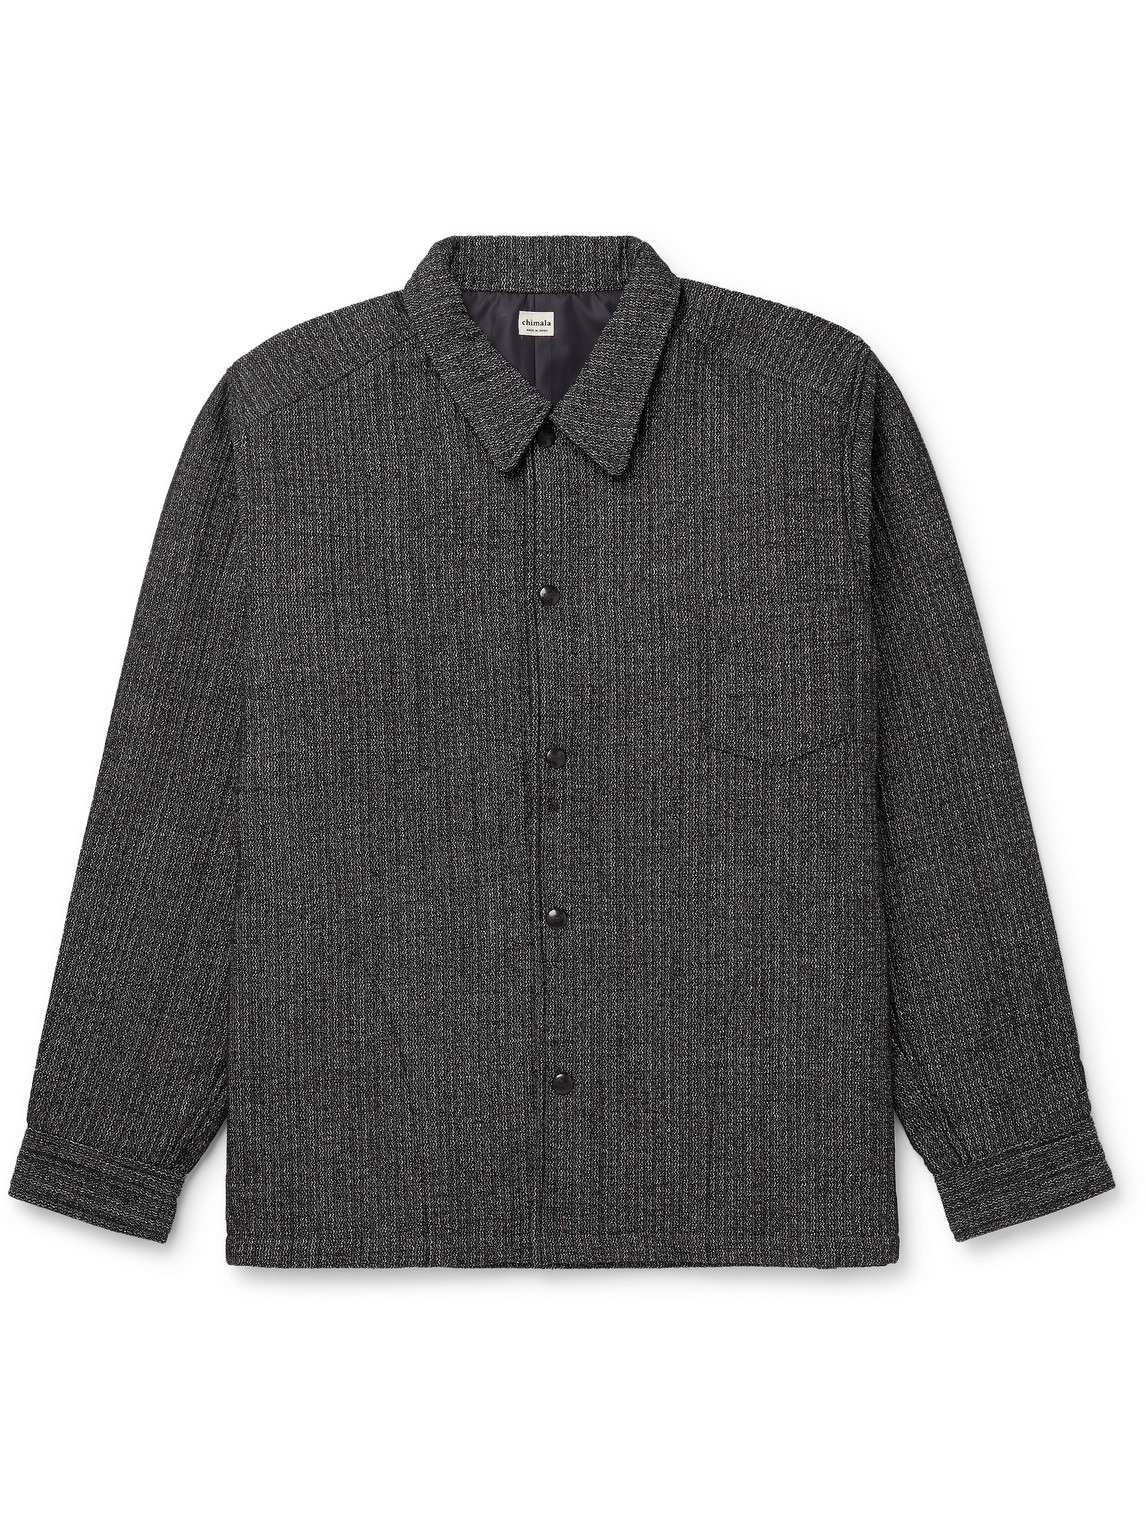 Striped Cotton-Blend Jacquard Shirt Jacket